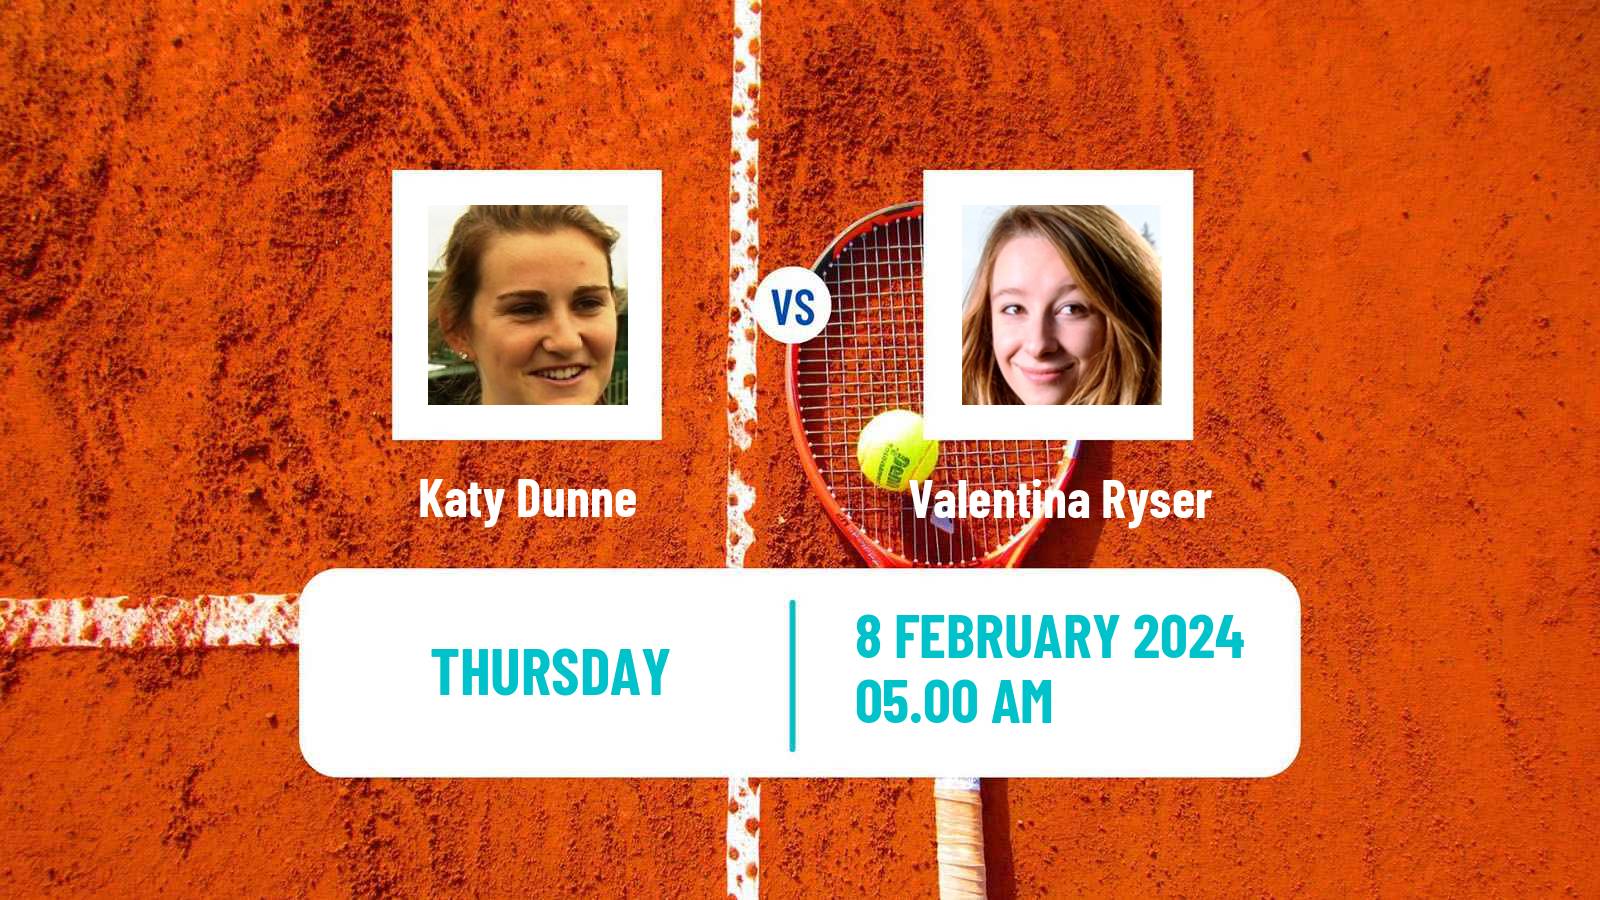 Tennis ITF W50 Edgbaston Women Katy Dunne - Valentina Ryser